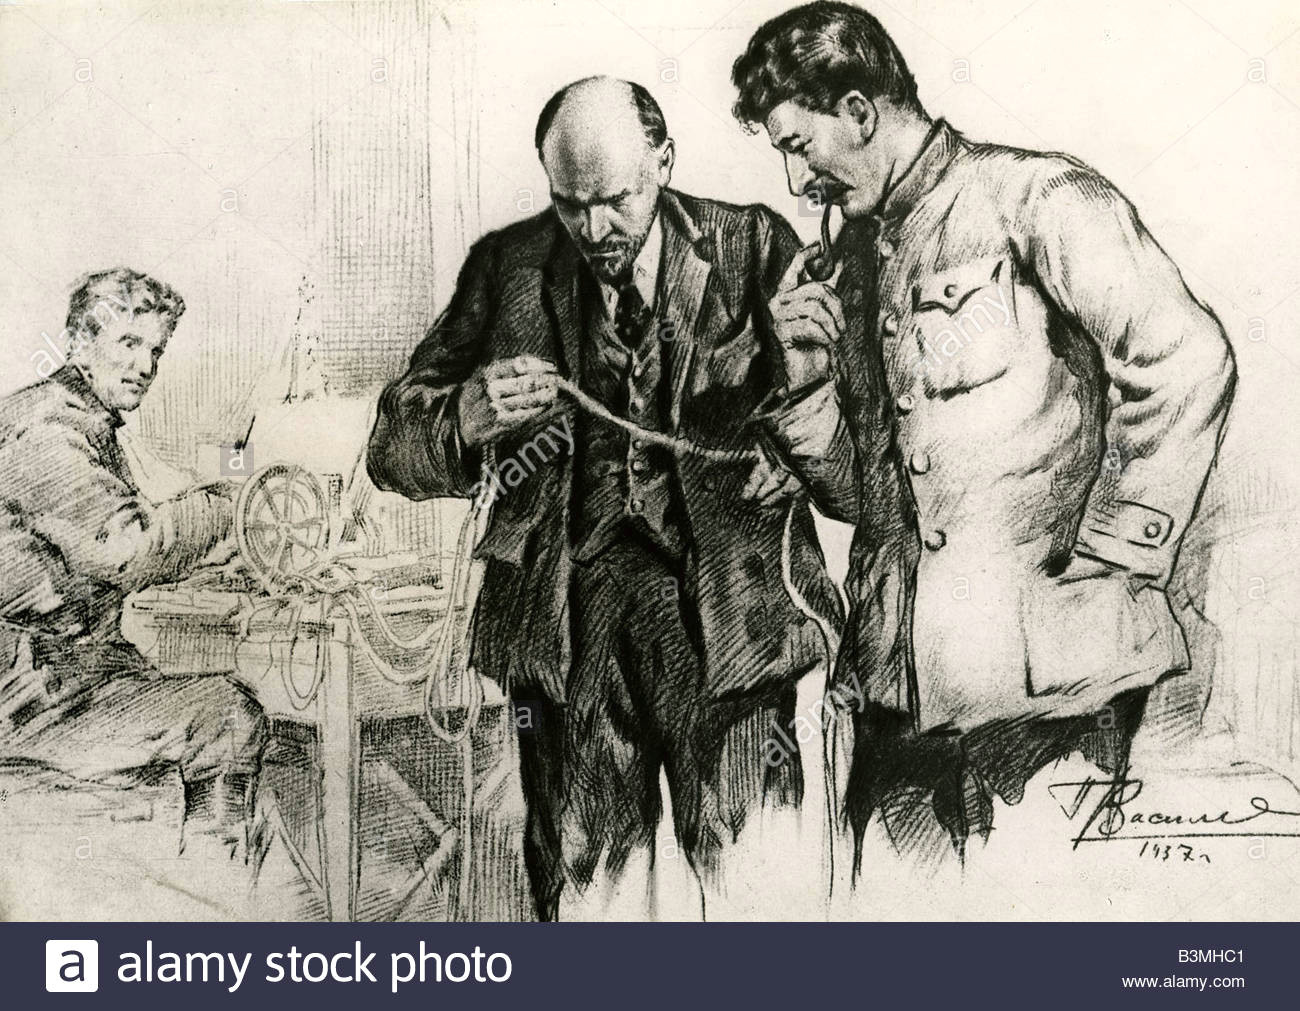 Stalin Drawing Wolves 1940s Russian Propaganda Stock Photos 1940s Russian Propaganda